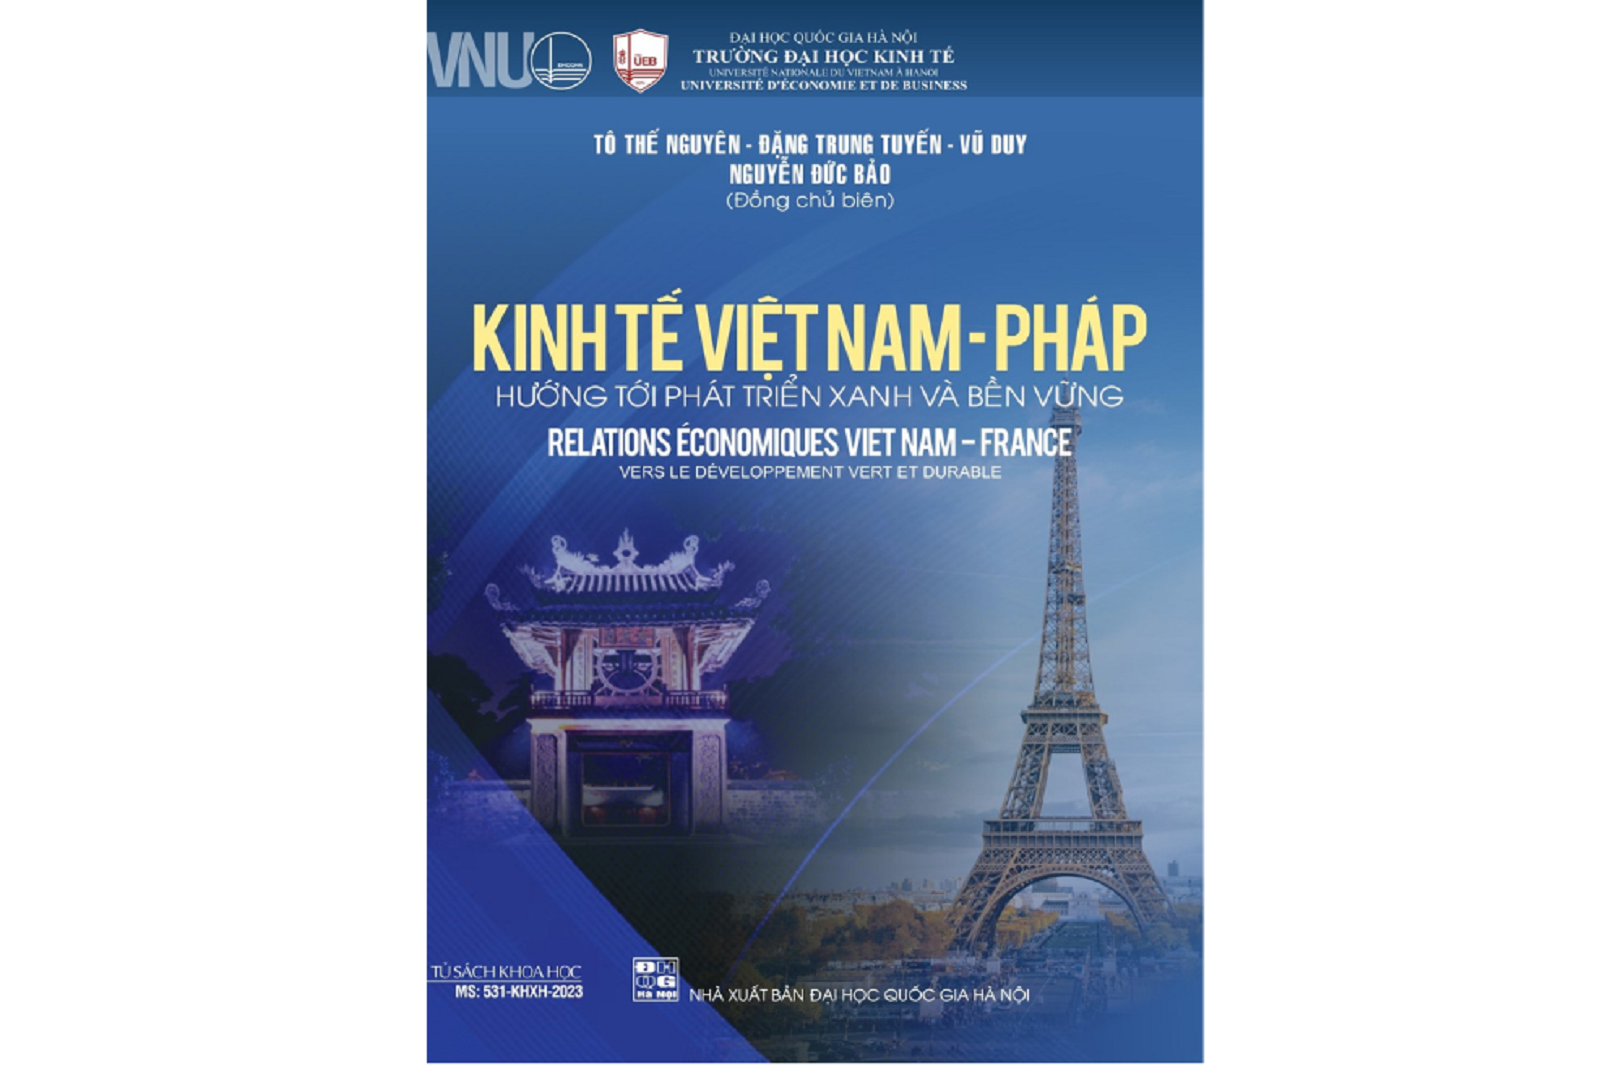 Vietnam - France Economy: Towards Green and Sustainable Development